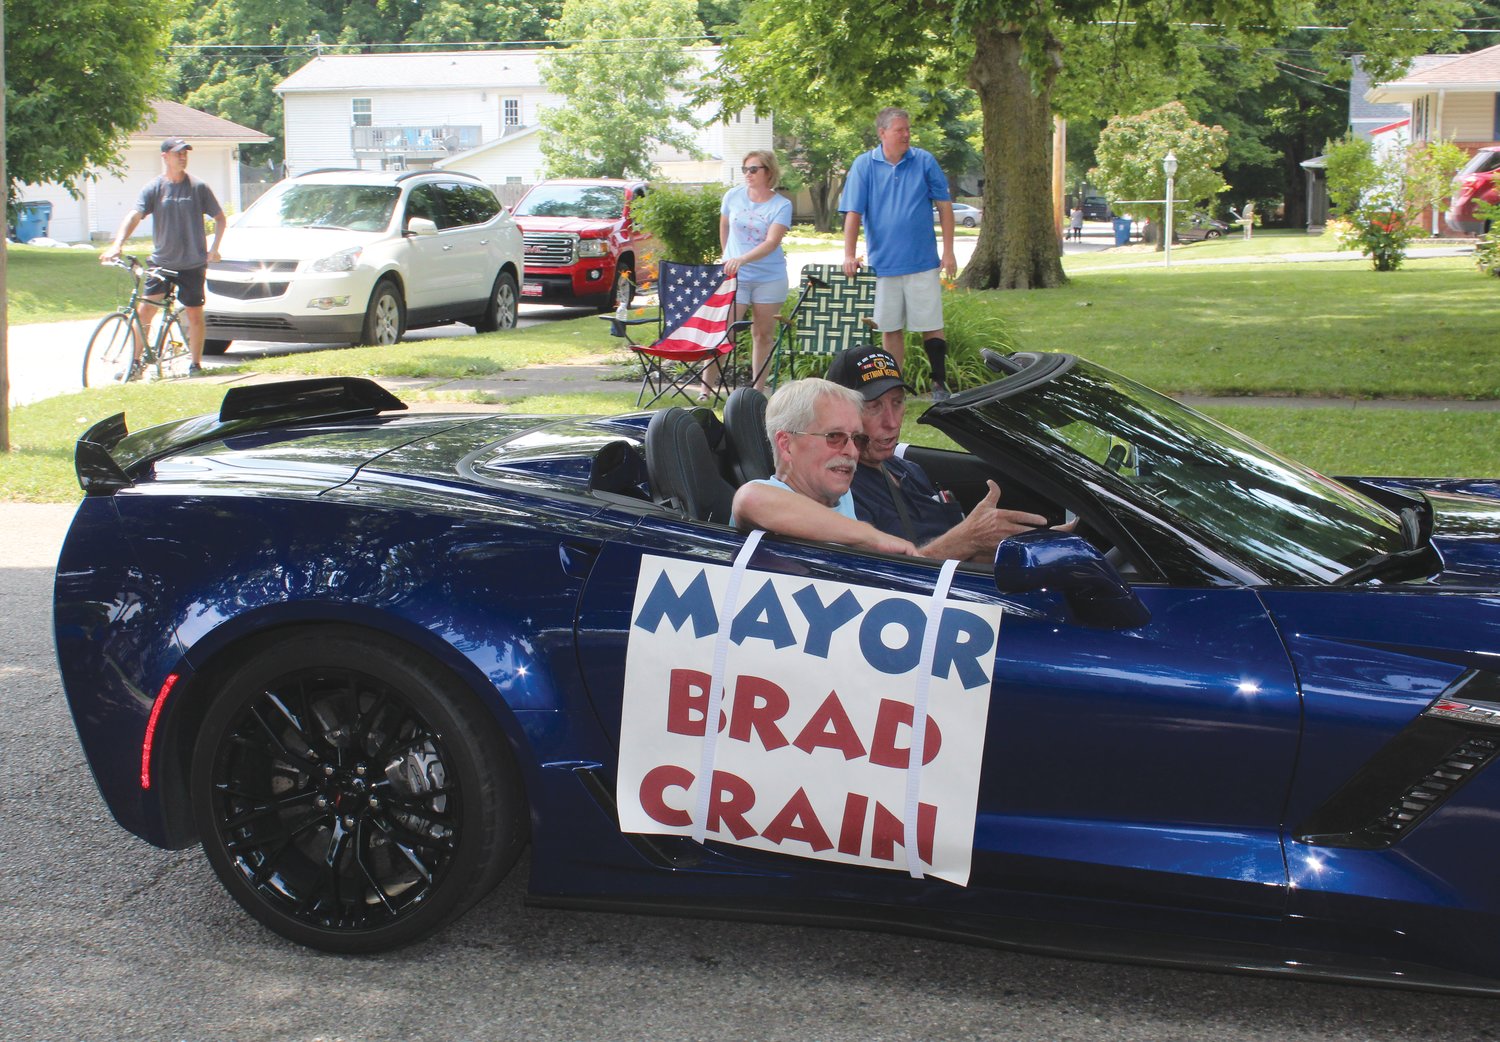 Covington Mayor Brad Crain was all smiles.